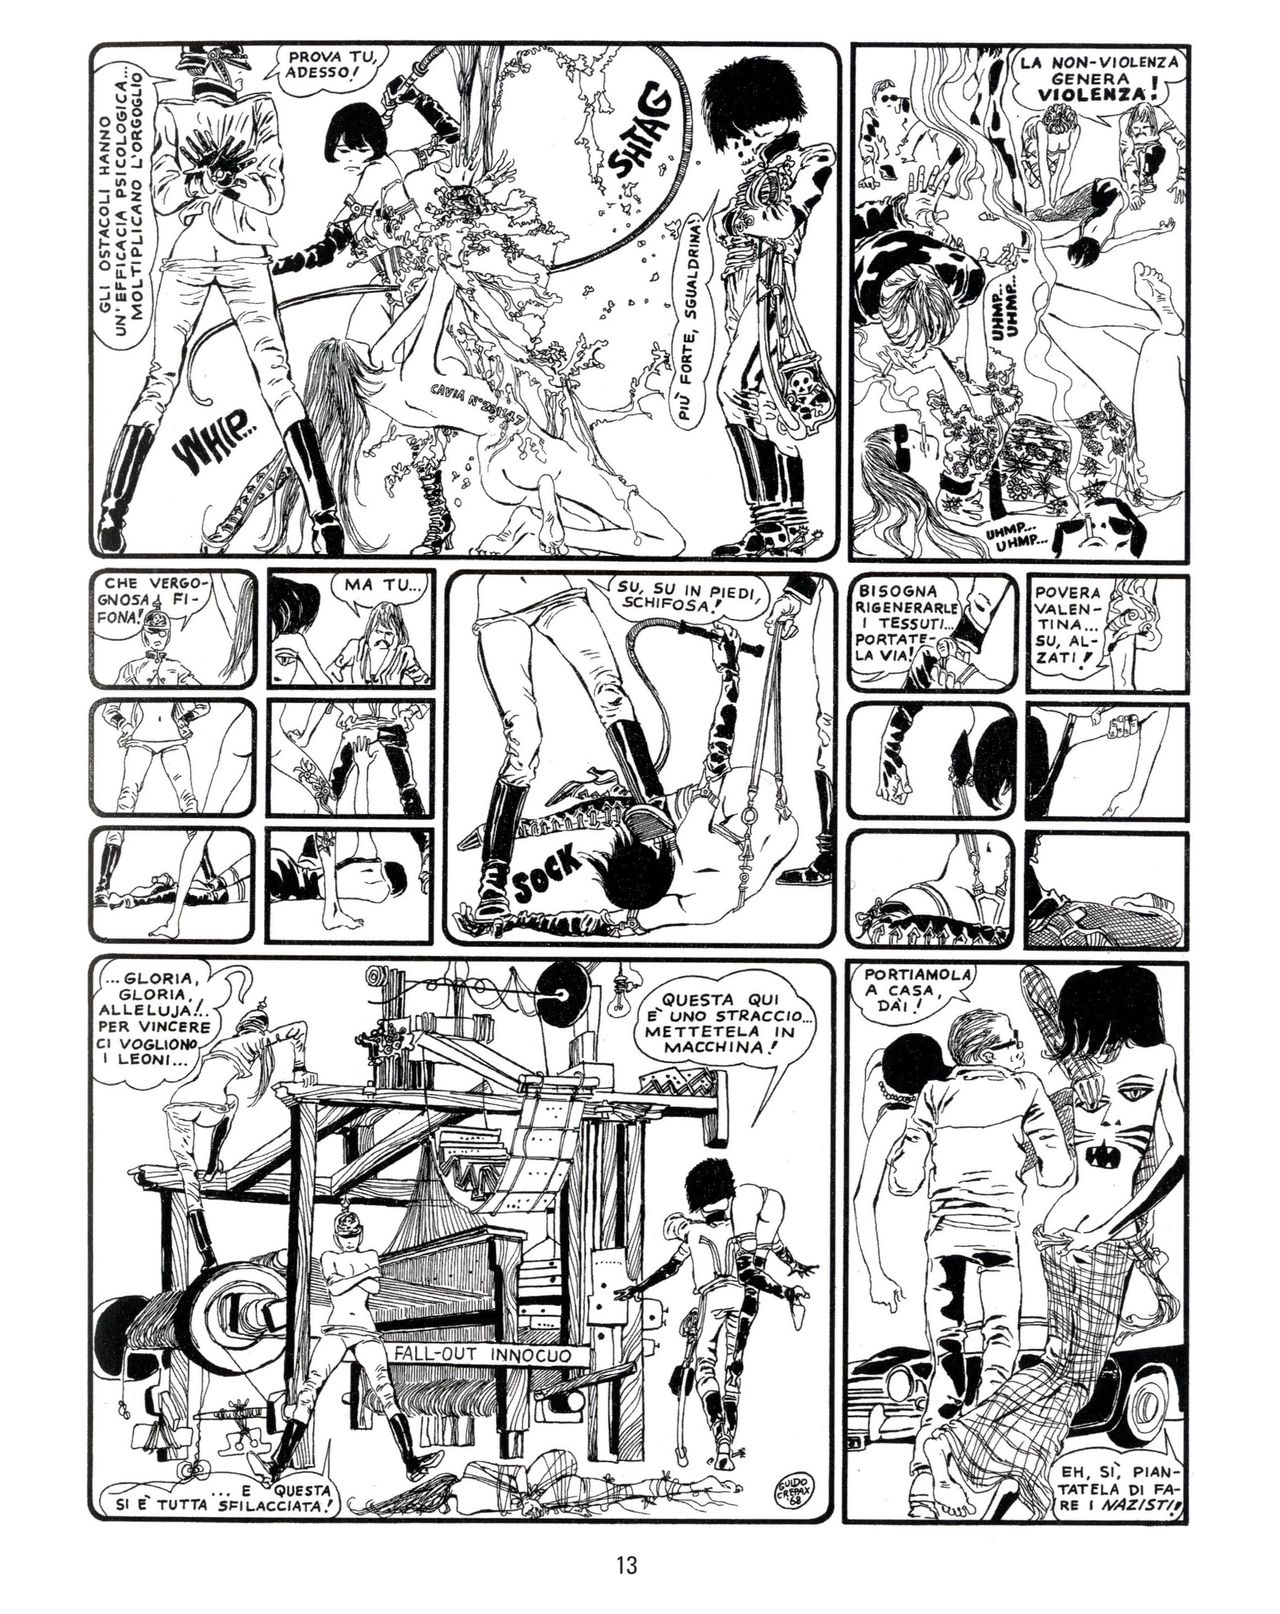 [Guido Crepax] Erotica Fumetti #25 : L'ascesa dei sotterranei : I cavalieri ciechi [Italian] 16